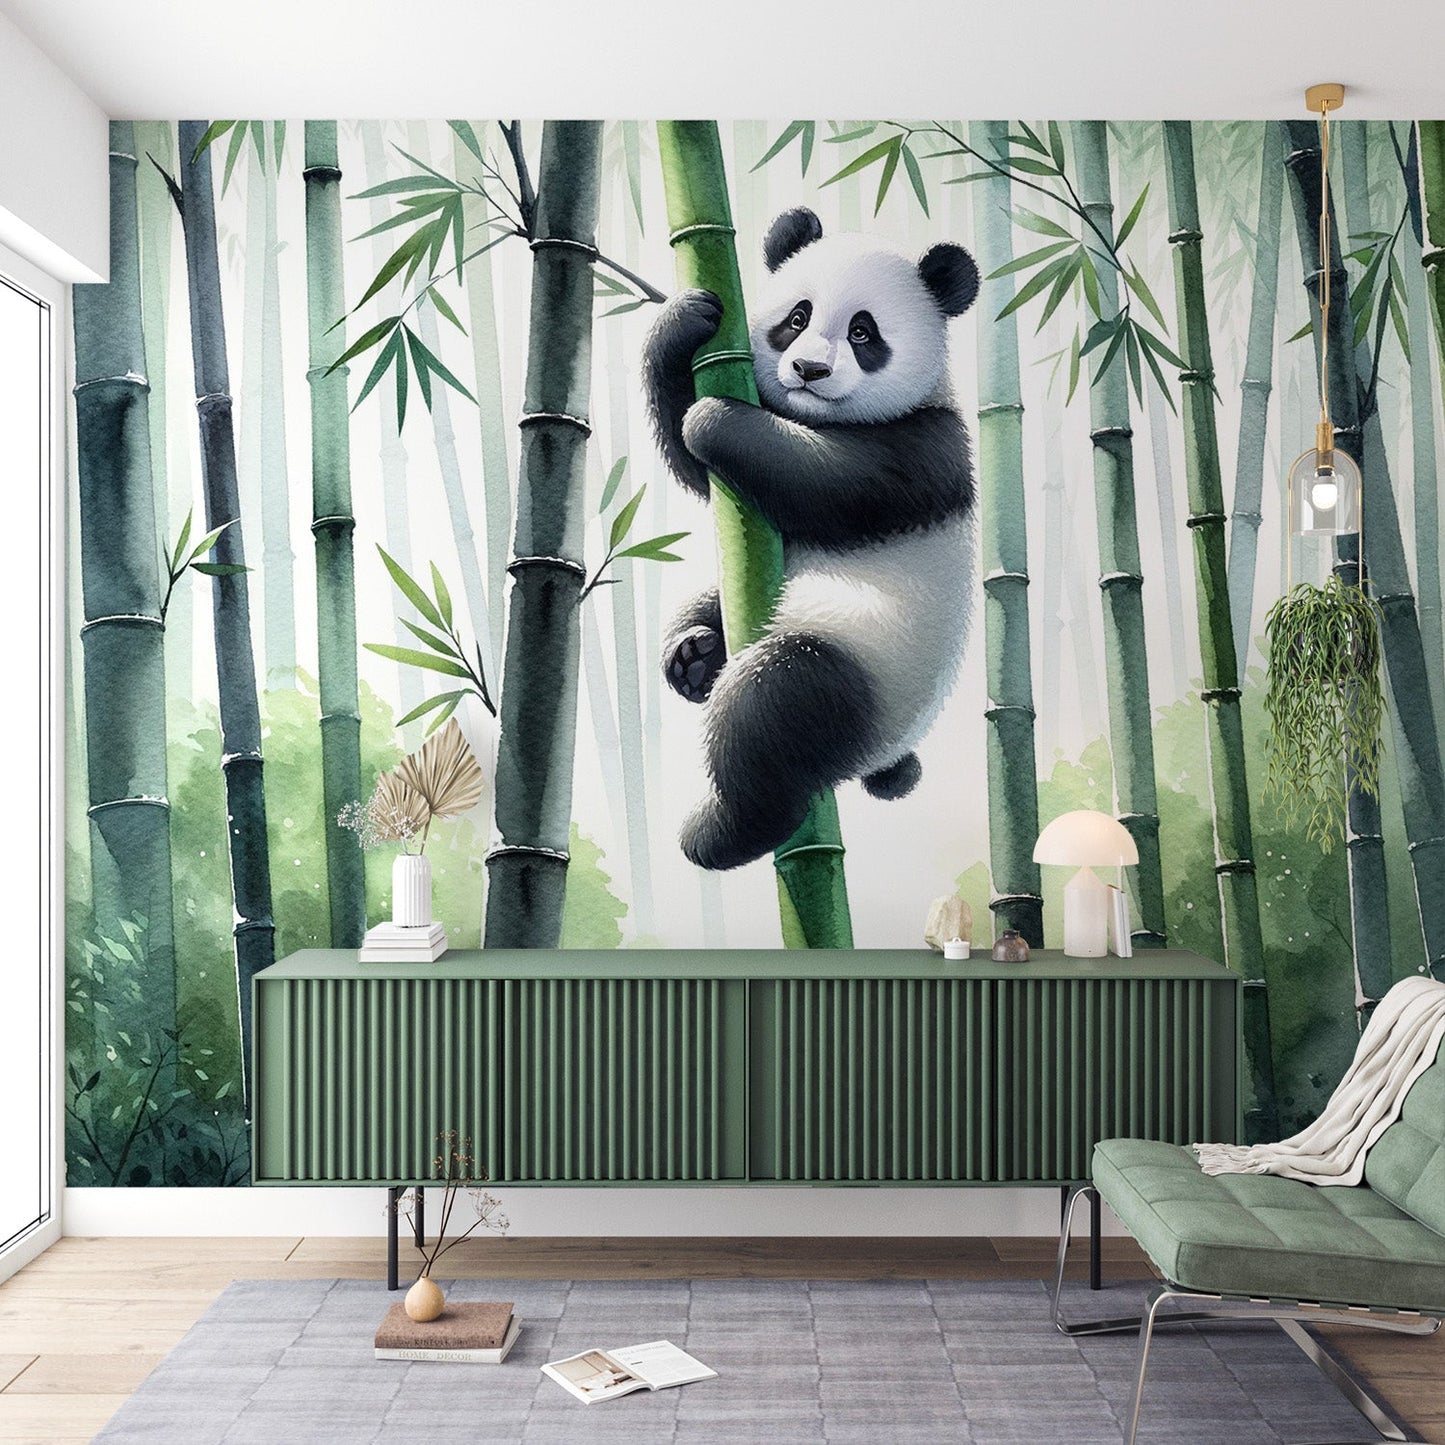 Panda wallpaper | Green bamboo forest with hanging panda